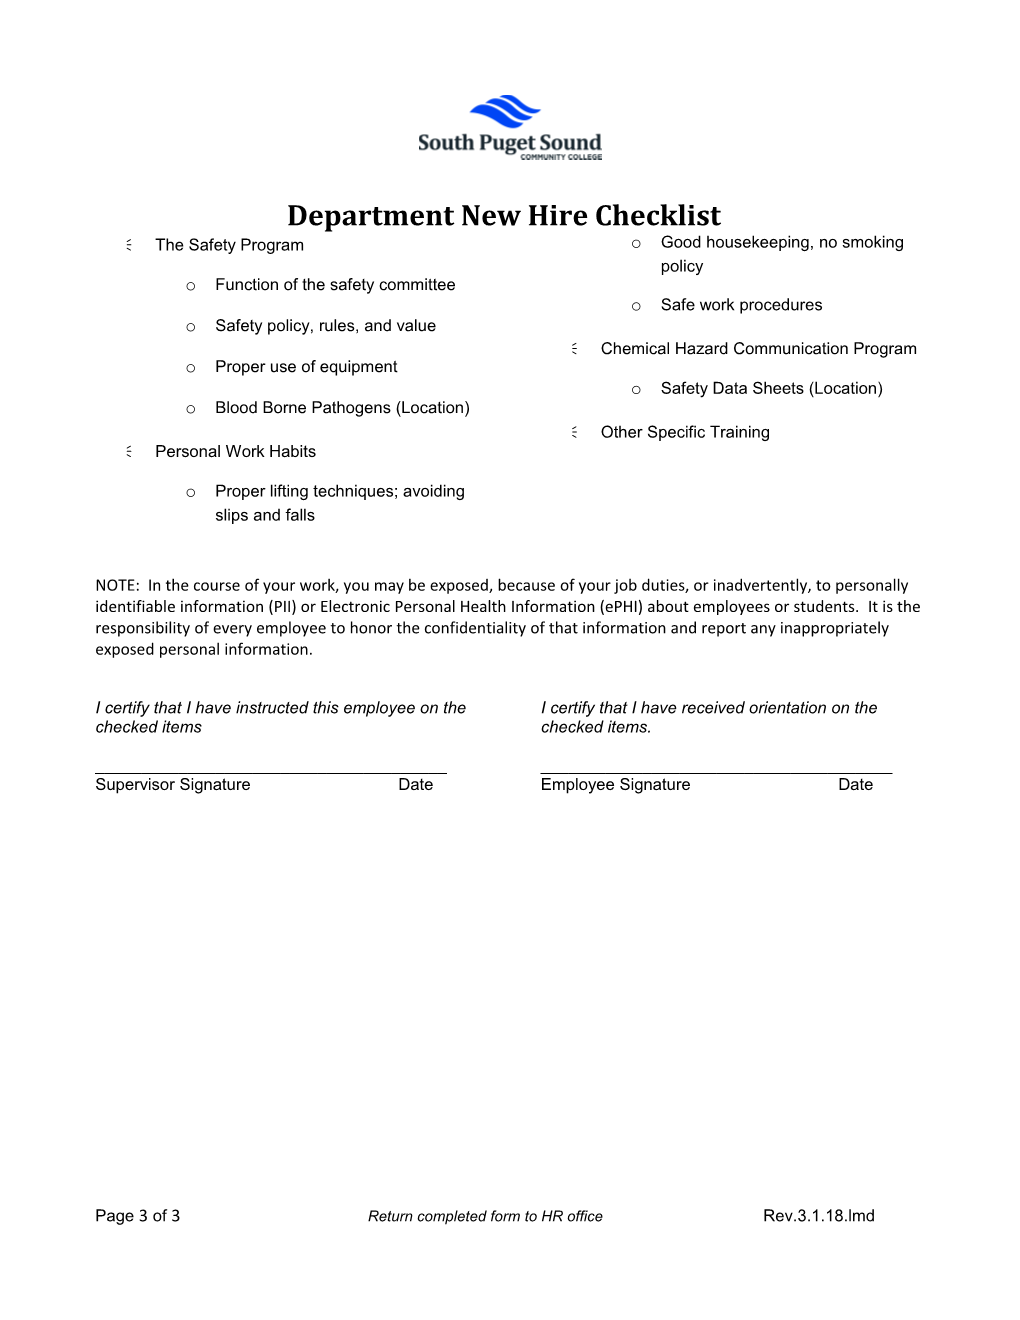 Department New Hire Checklist